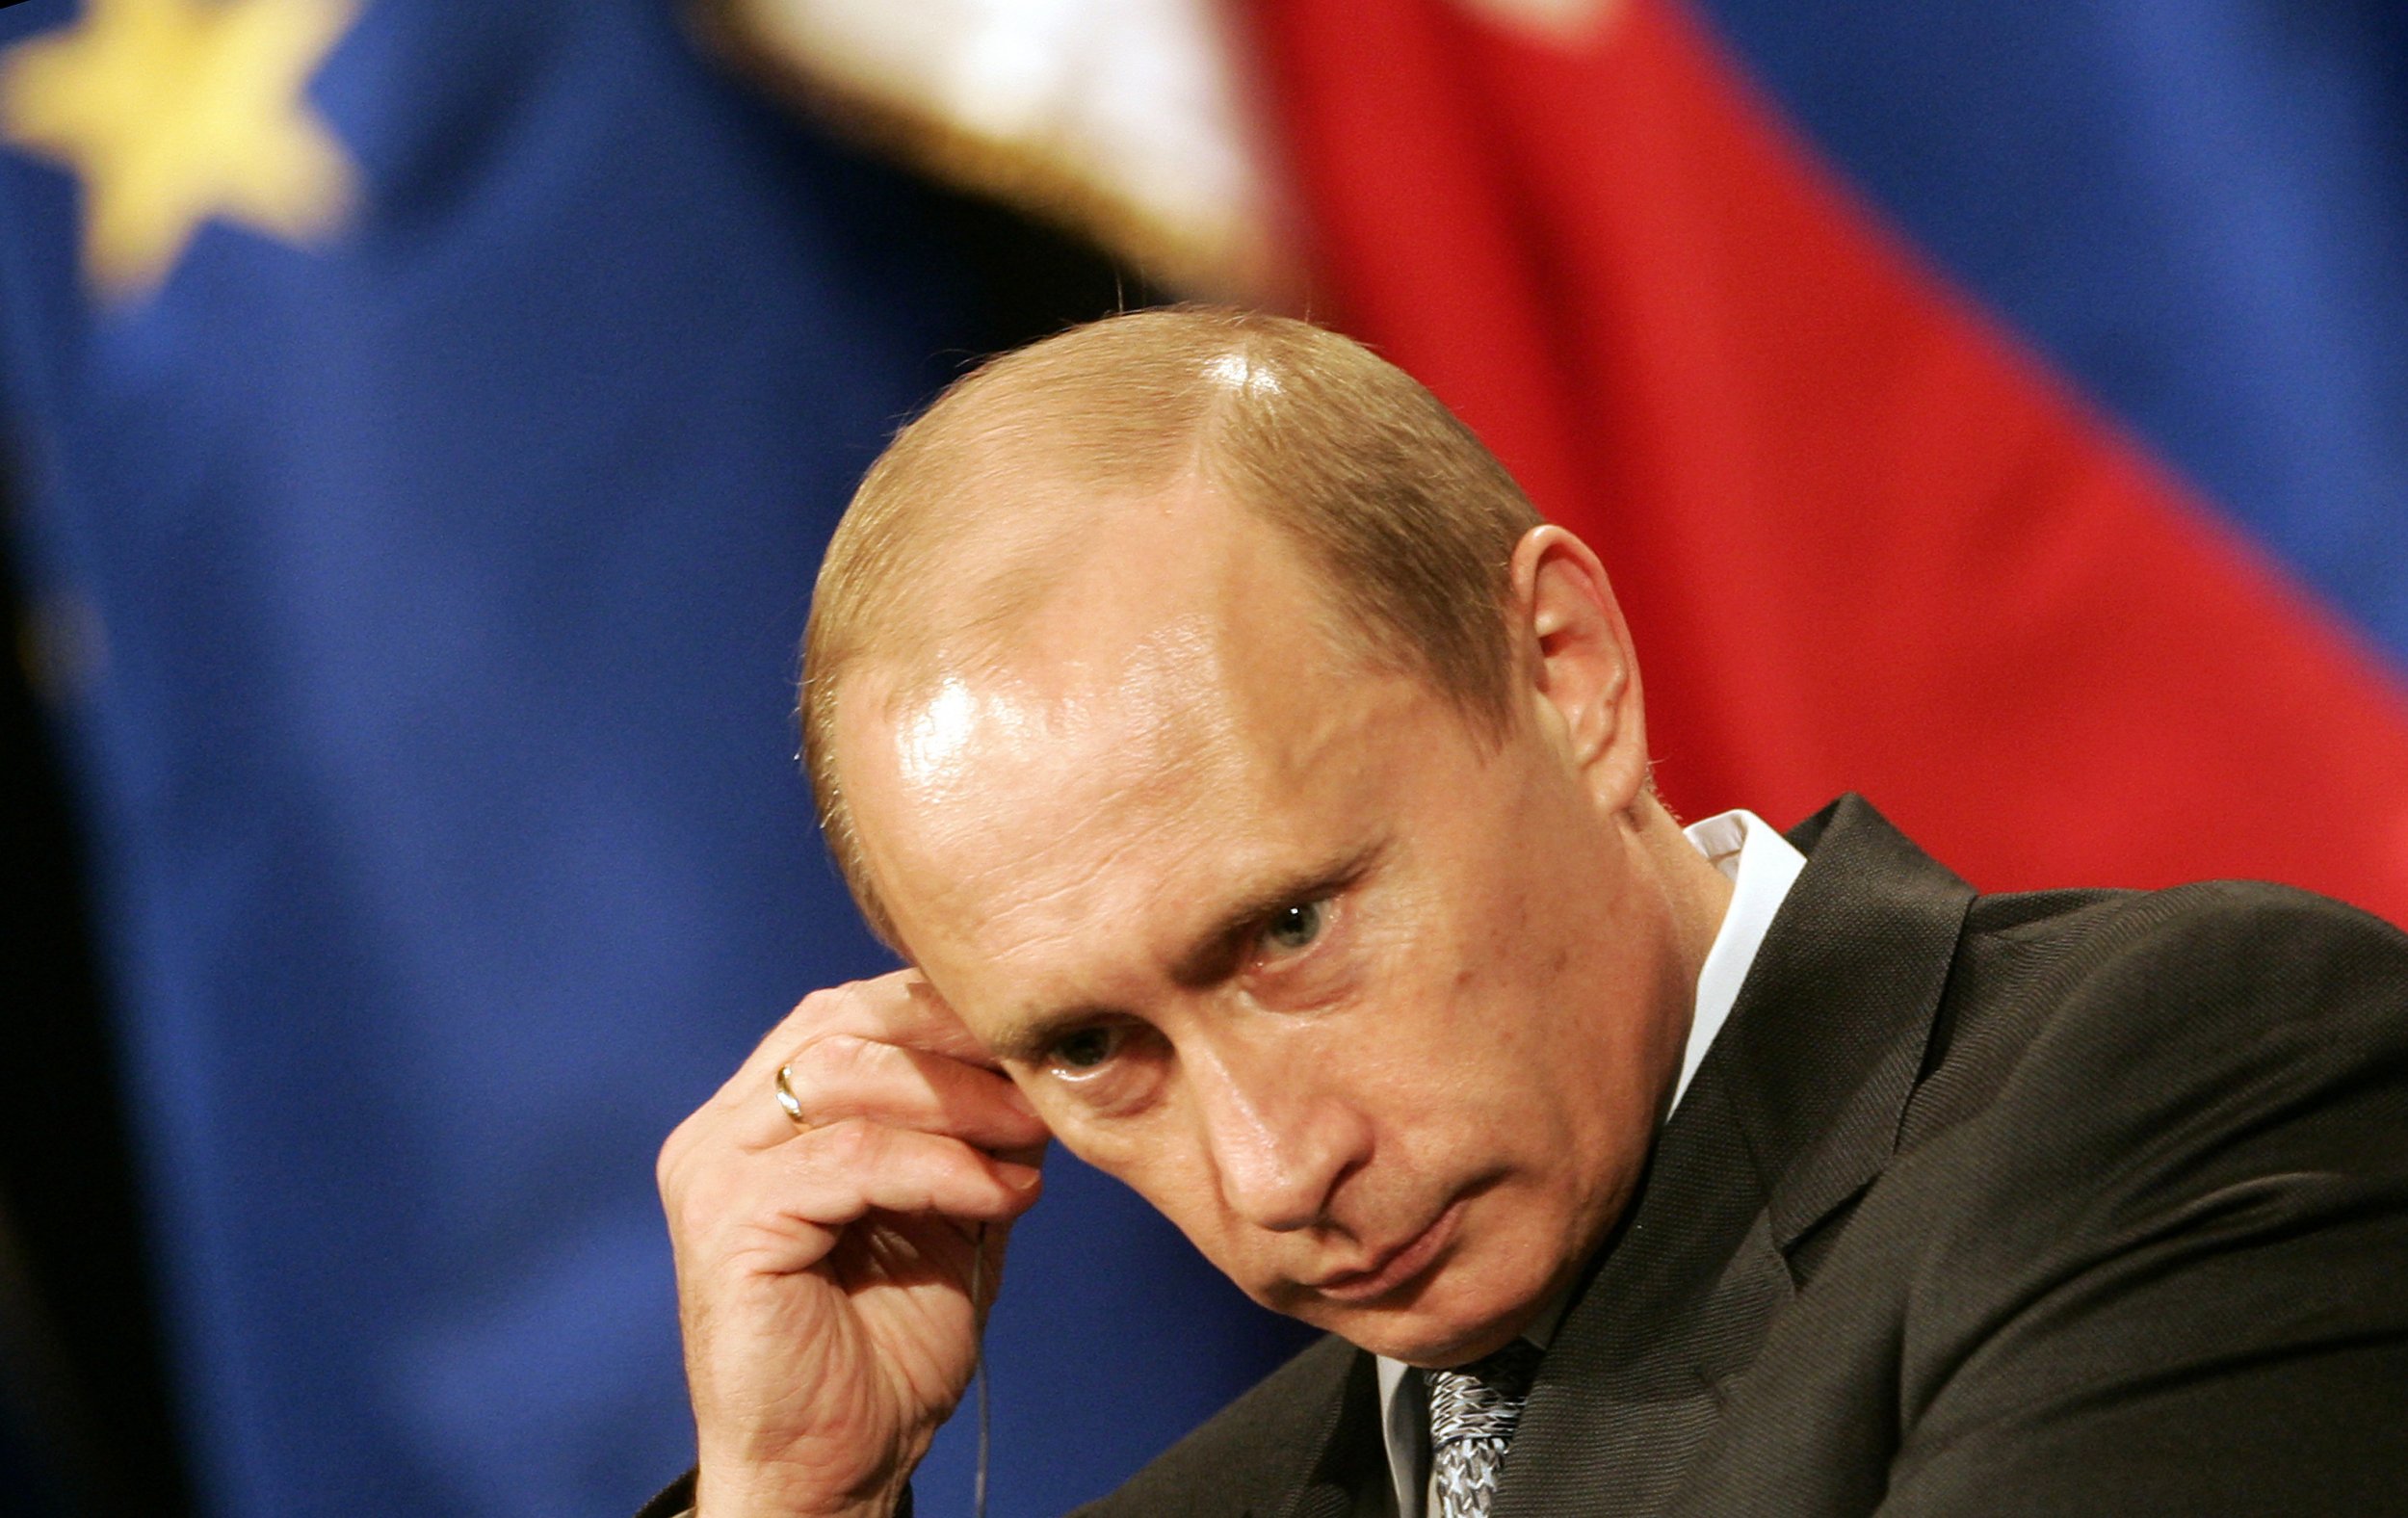 'Putin Involved in Drug Smuggling Ring', Says Ex-KGB Officer